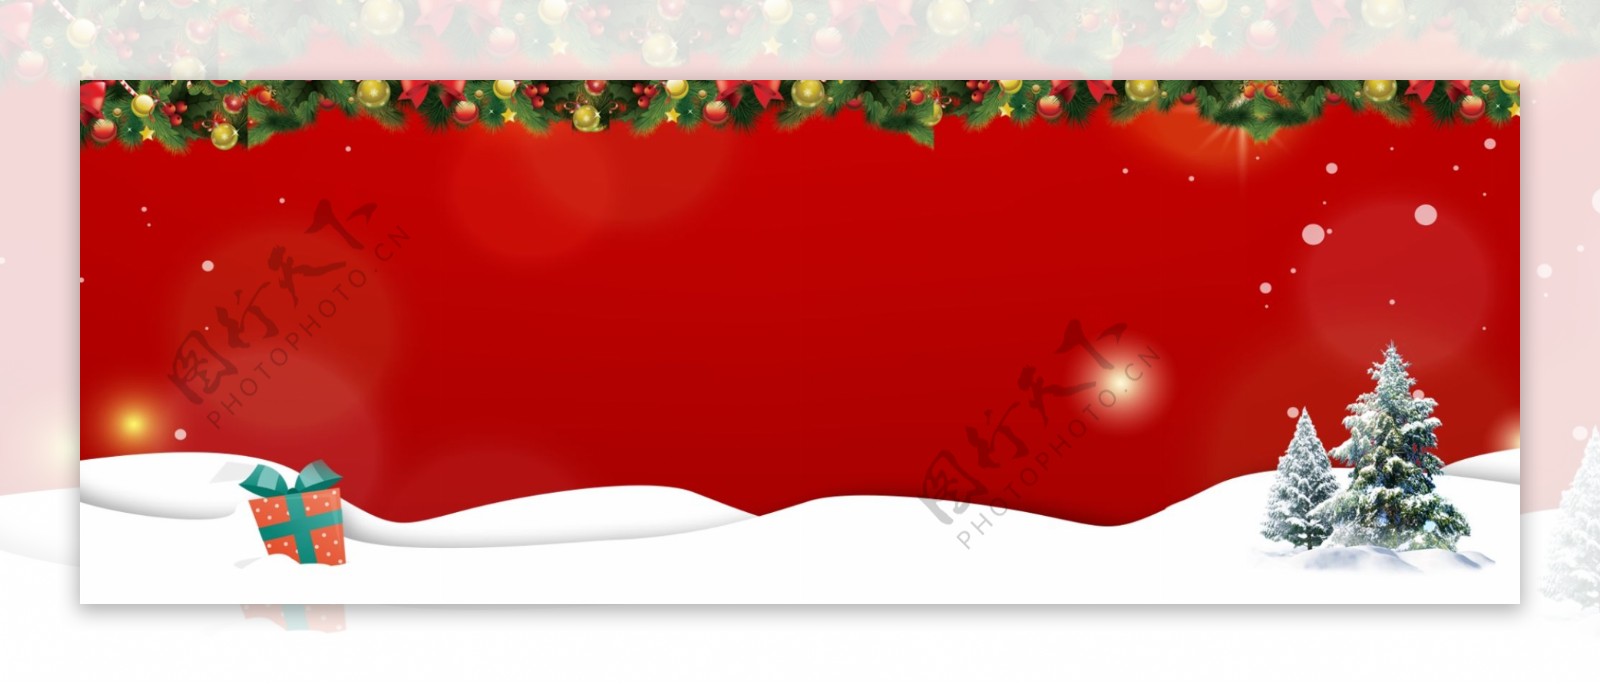 创意圣诞节红色banner背景